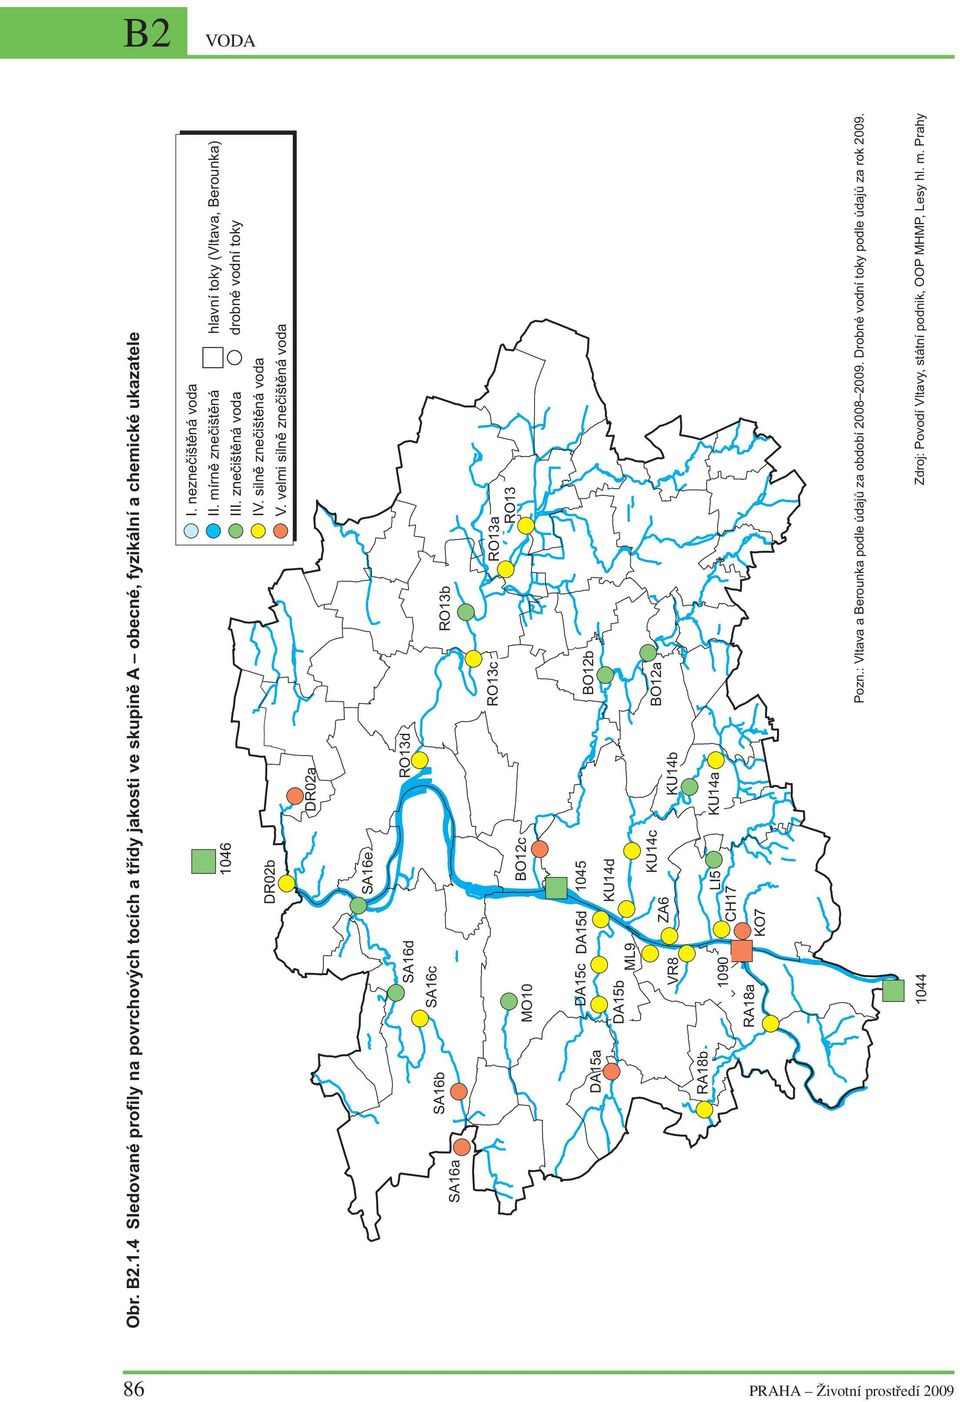 velmi silnì zneèištìná voda hlavní toky (Vltava, Berounka) drobné vodní toky DR02a SA16e SA16d RO13d SA16c SA16b RO13b SA16a RO13c MO10 BO12c RO13a RO13 DA15c DA15d